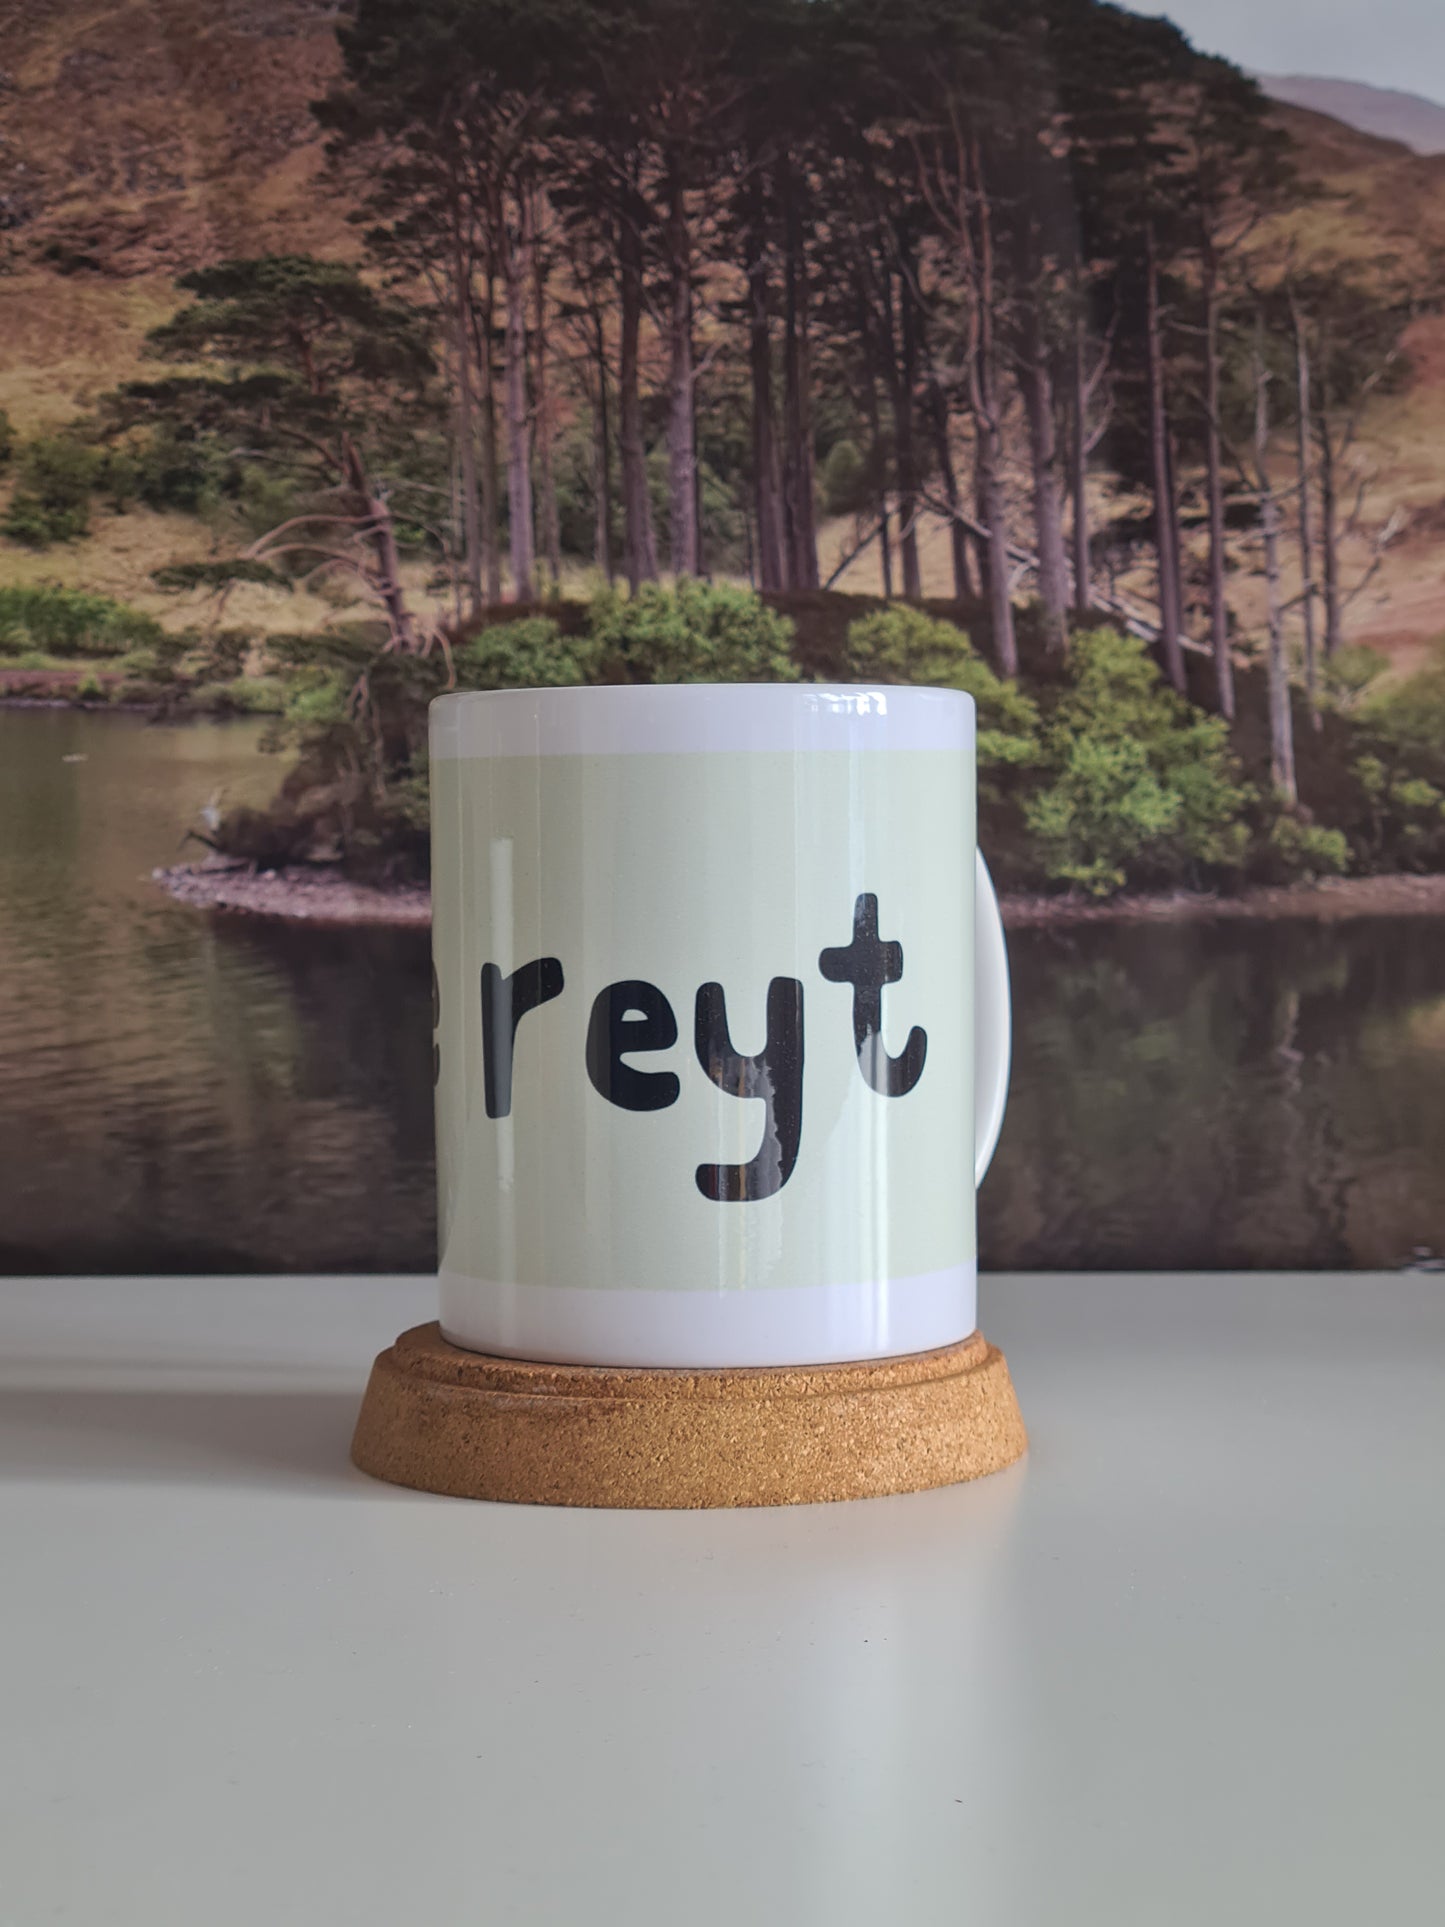 Be Reyt - Yorkshire Slang Mug - Luke Horton